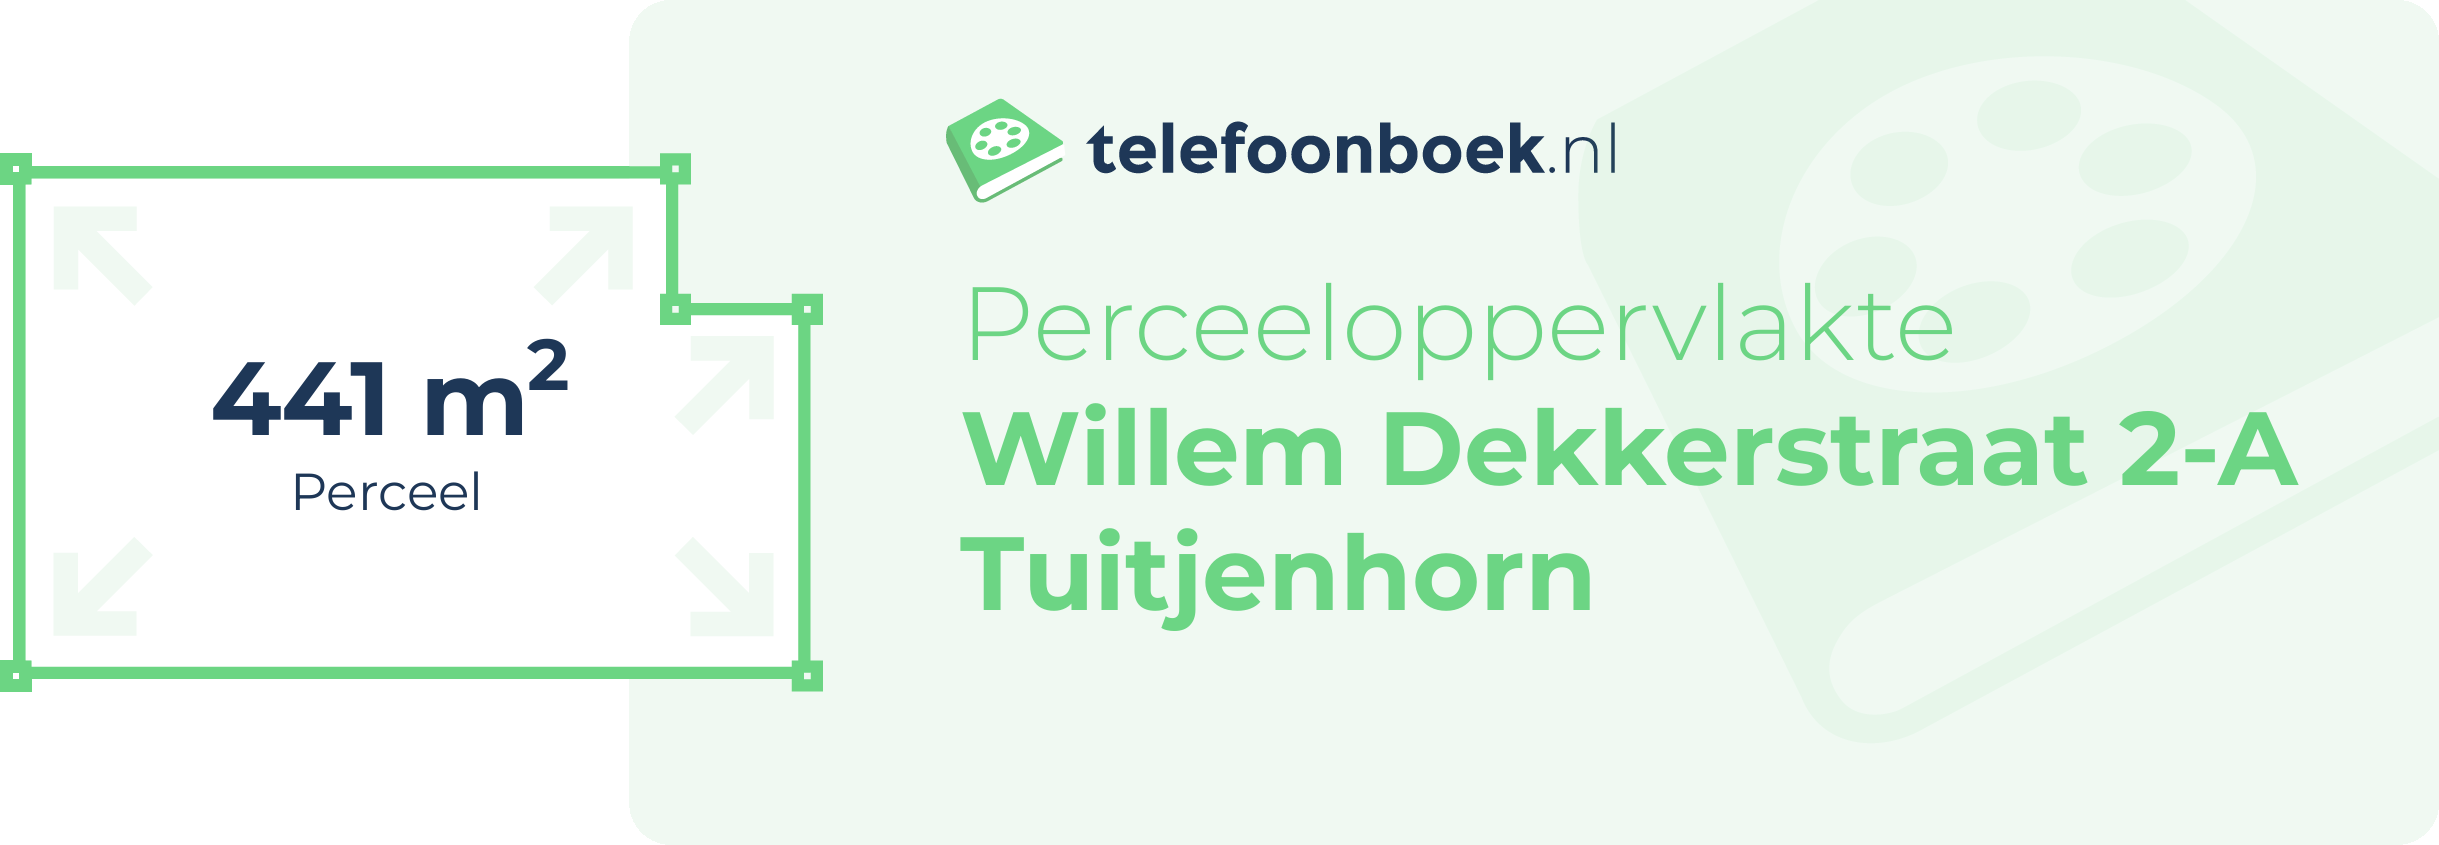 Perceeloppervlakte Willem Dekkerstraat 2-A Tuitjenhorn